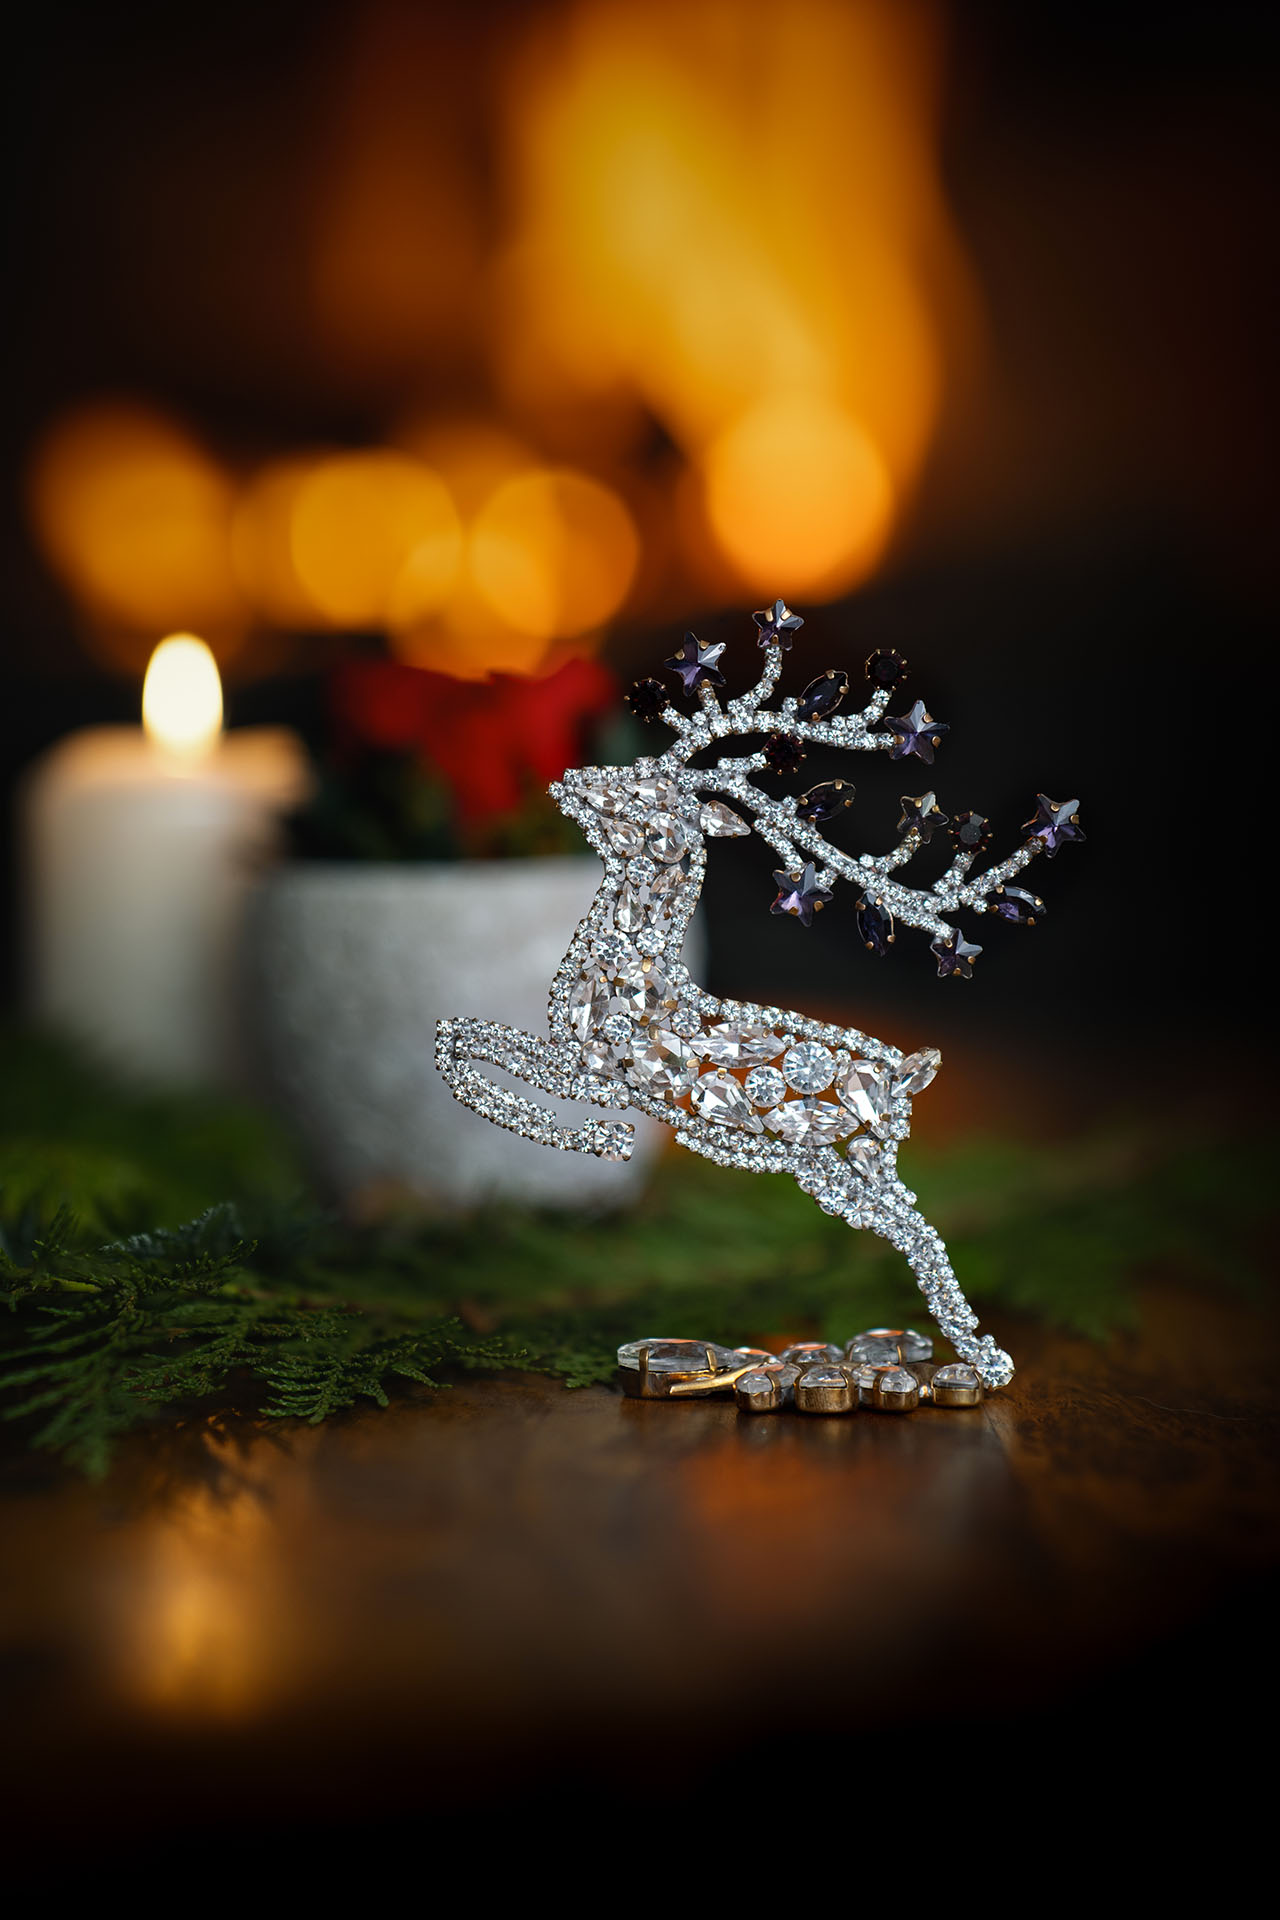 Decorative reindeer figurine with clear rhinestones - facing left